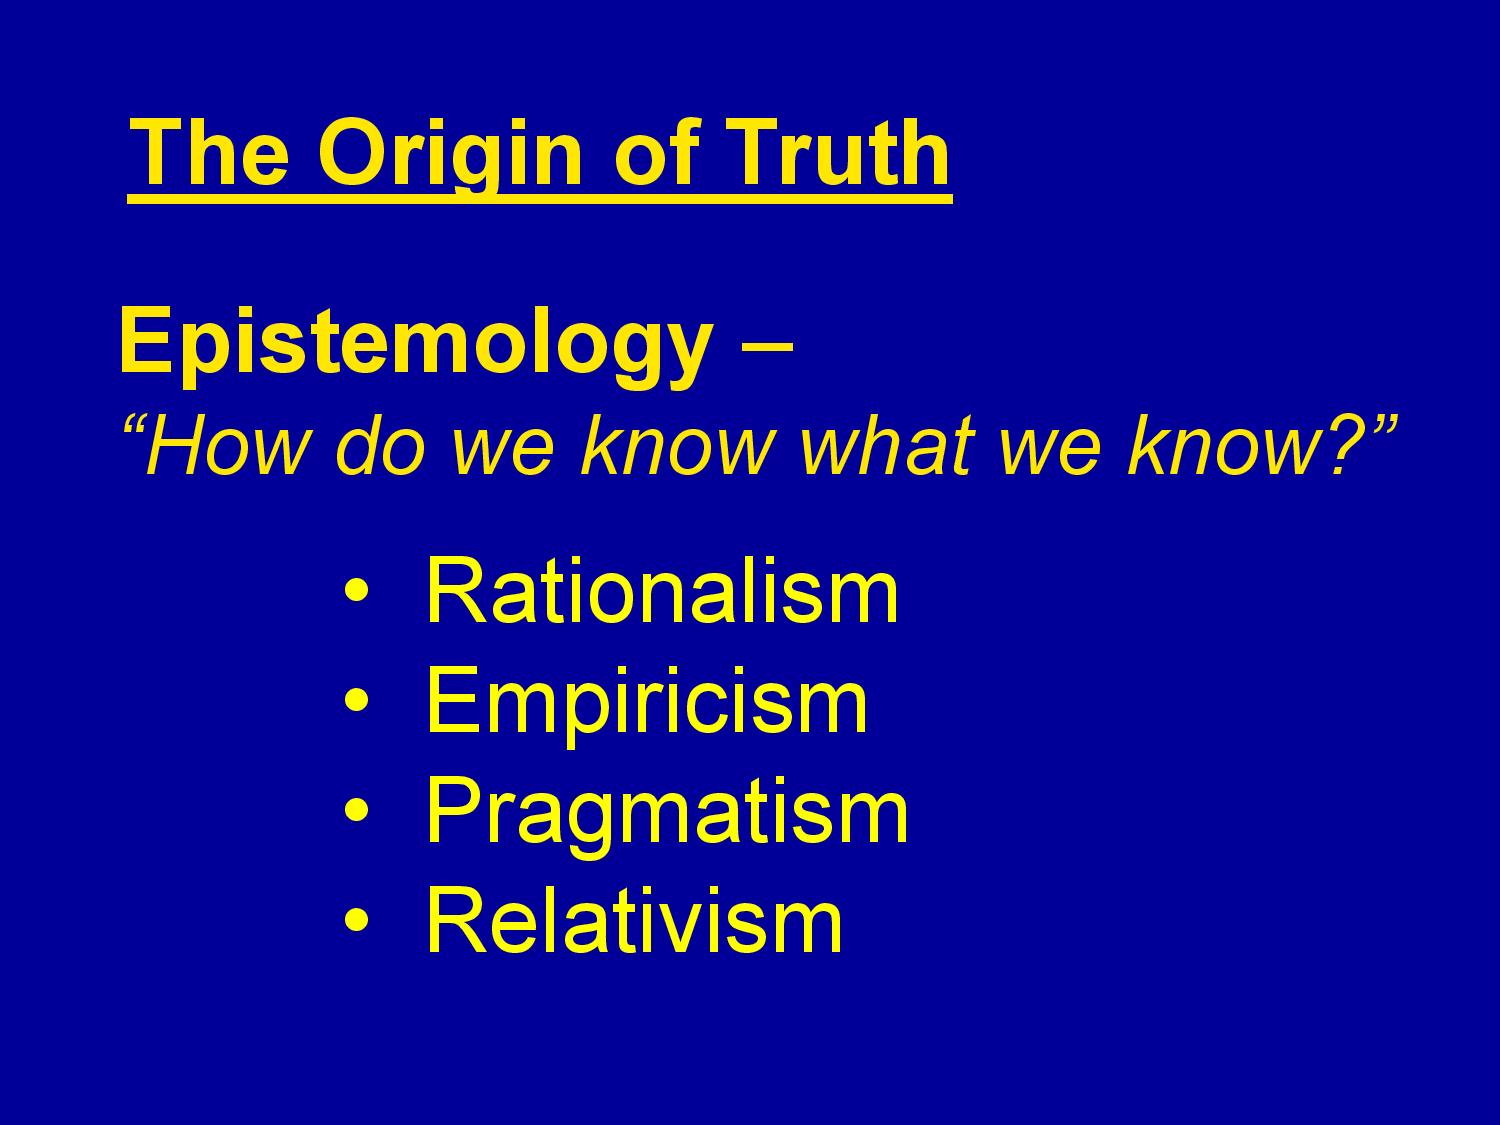 Origin of Truth Powerpoint-page-001.jpg